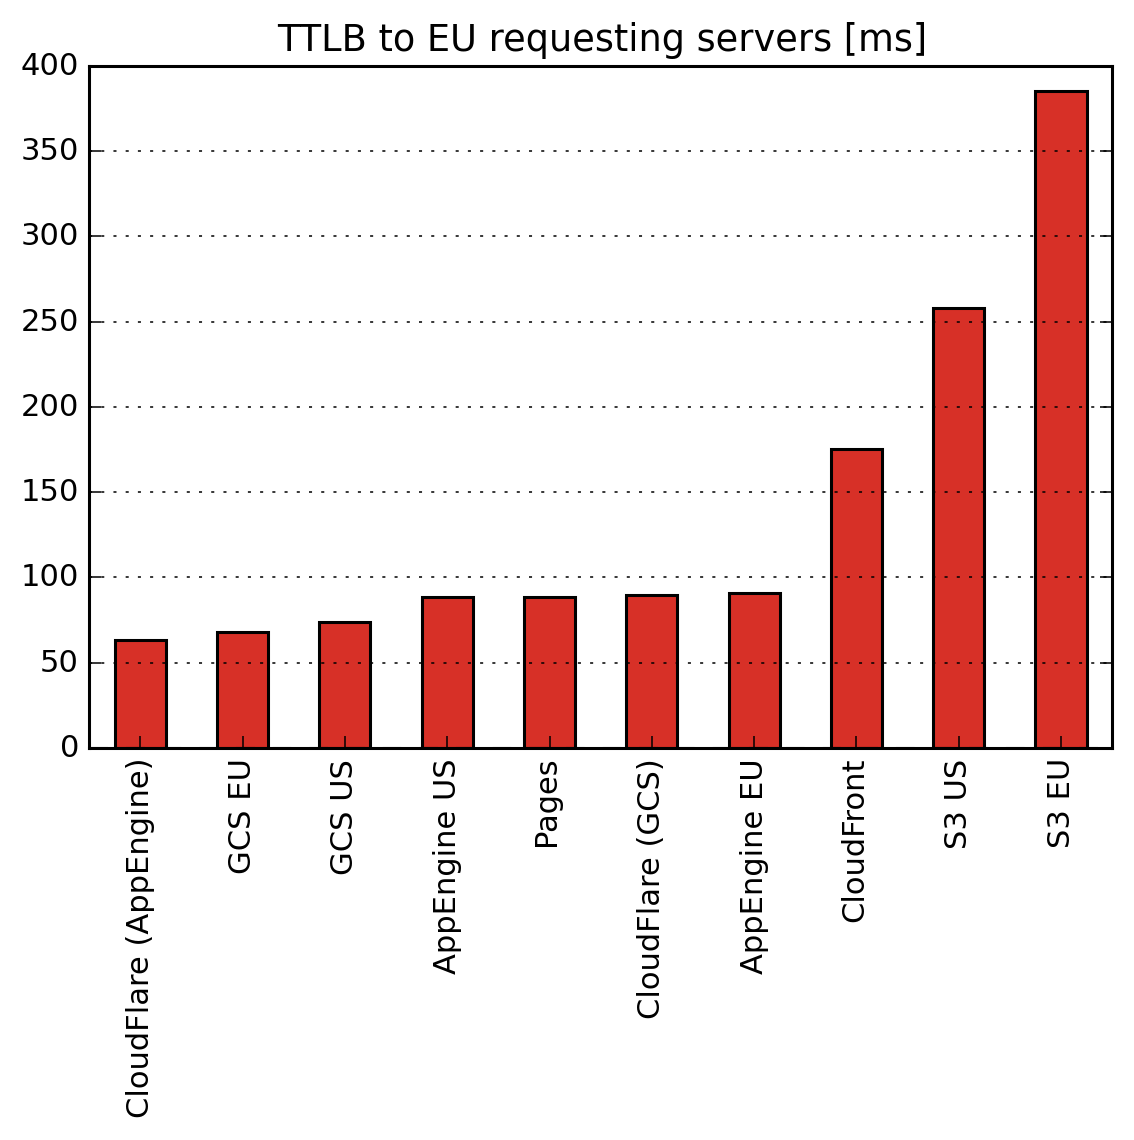 TTLB by host, EU requesting servers